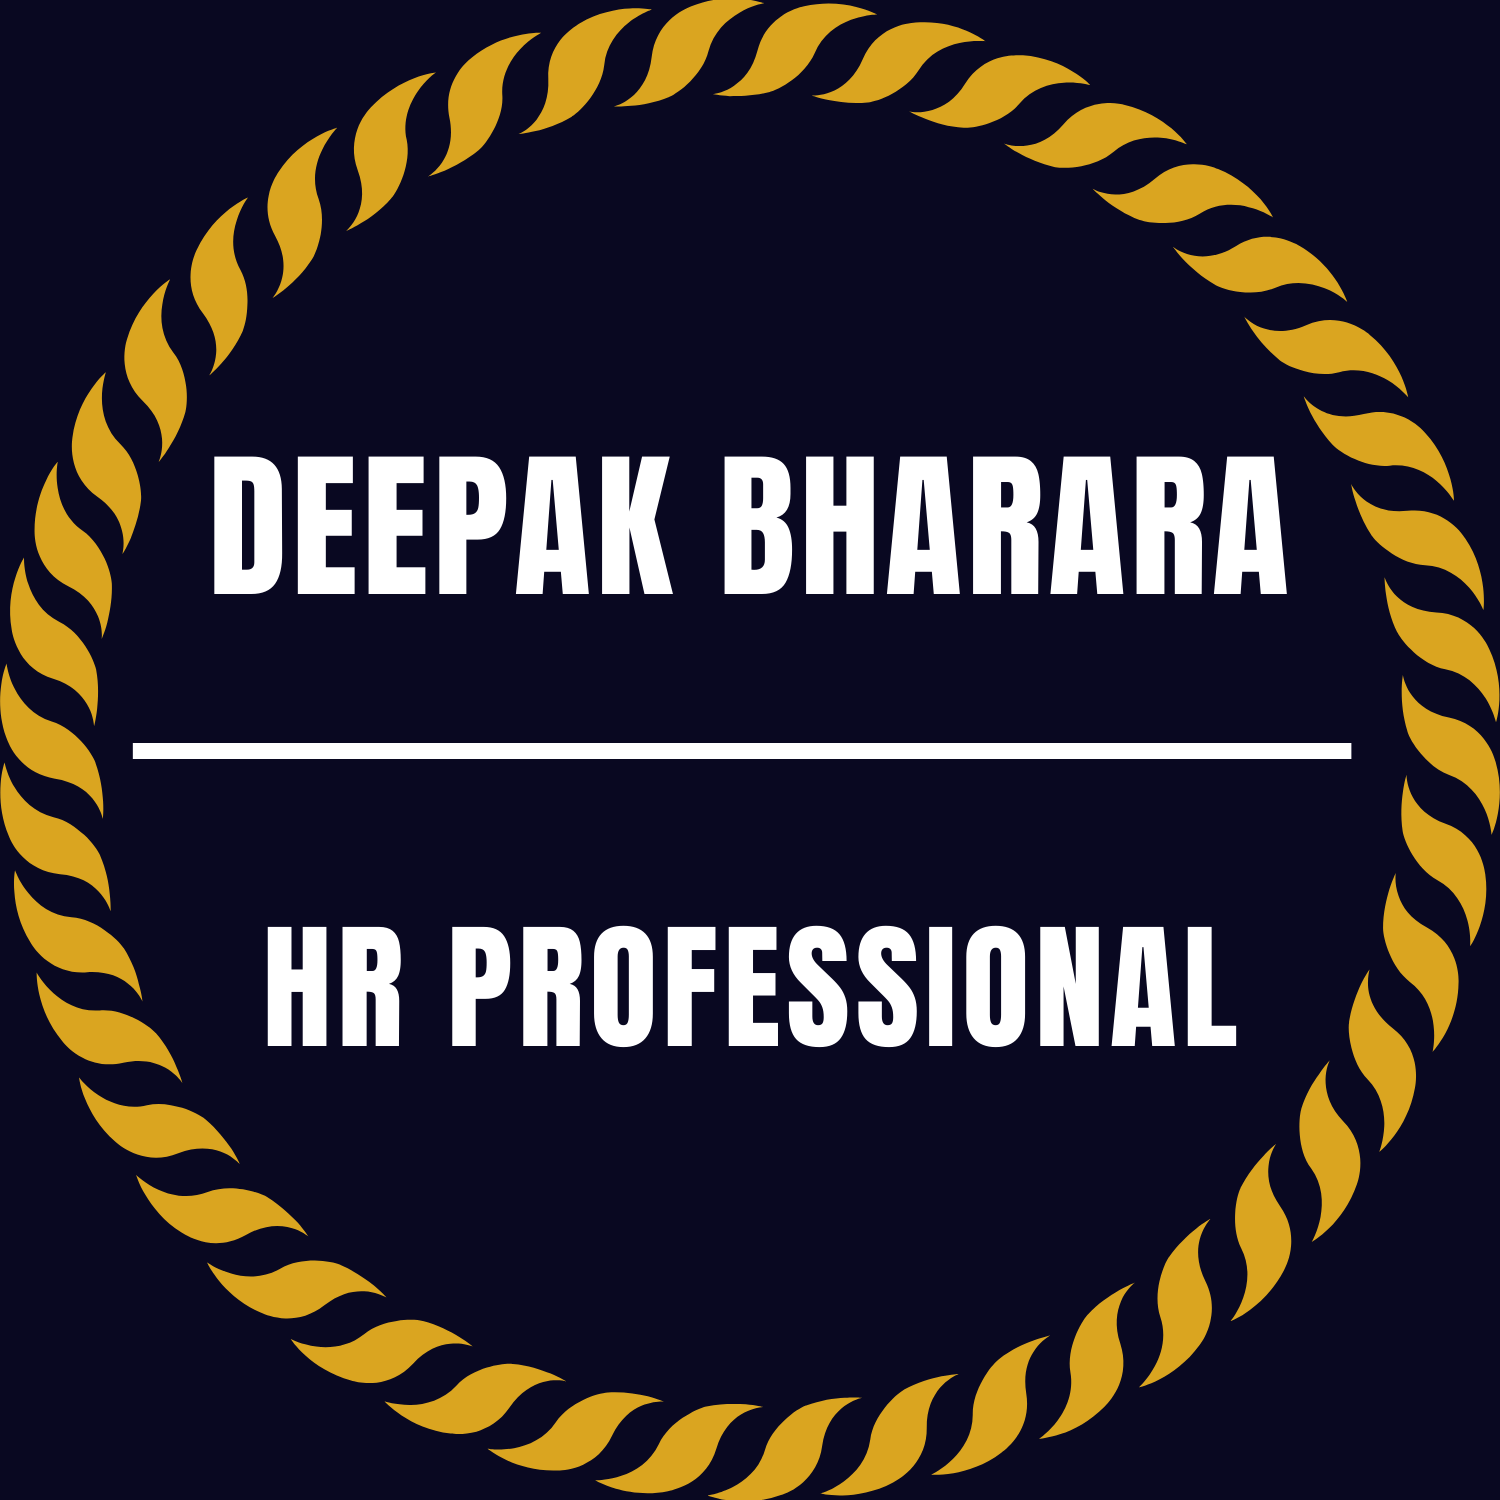 Deepak Bharara